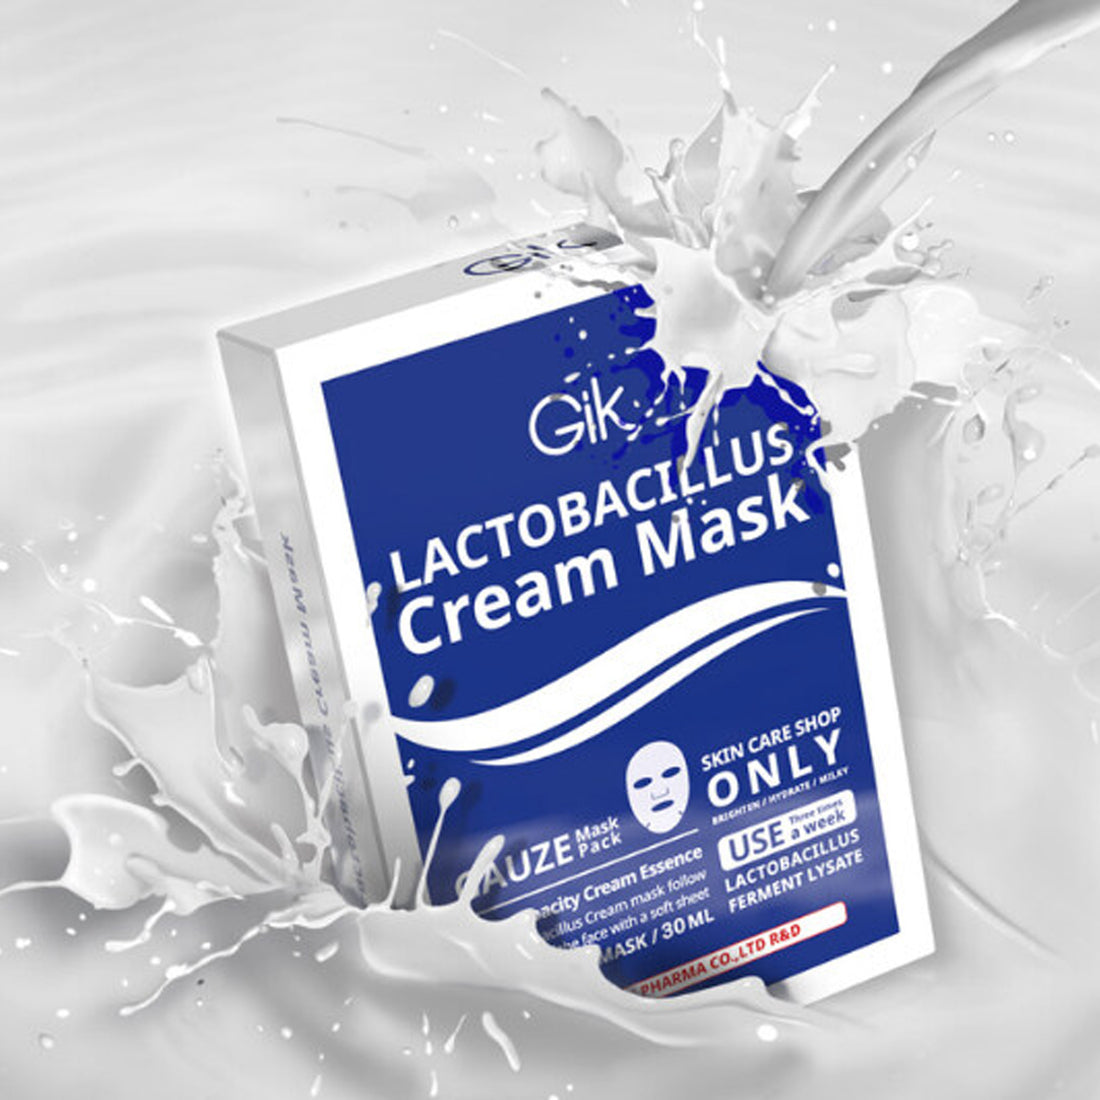 Gik Lactobacillus Cream Mask 5pcs